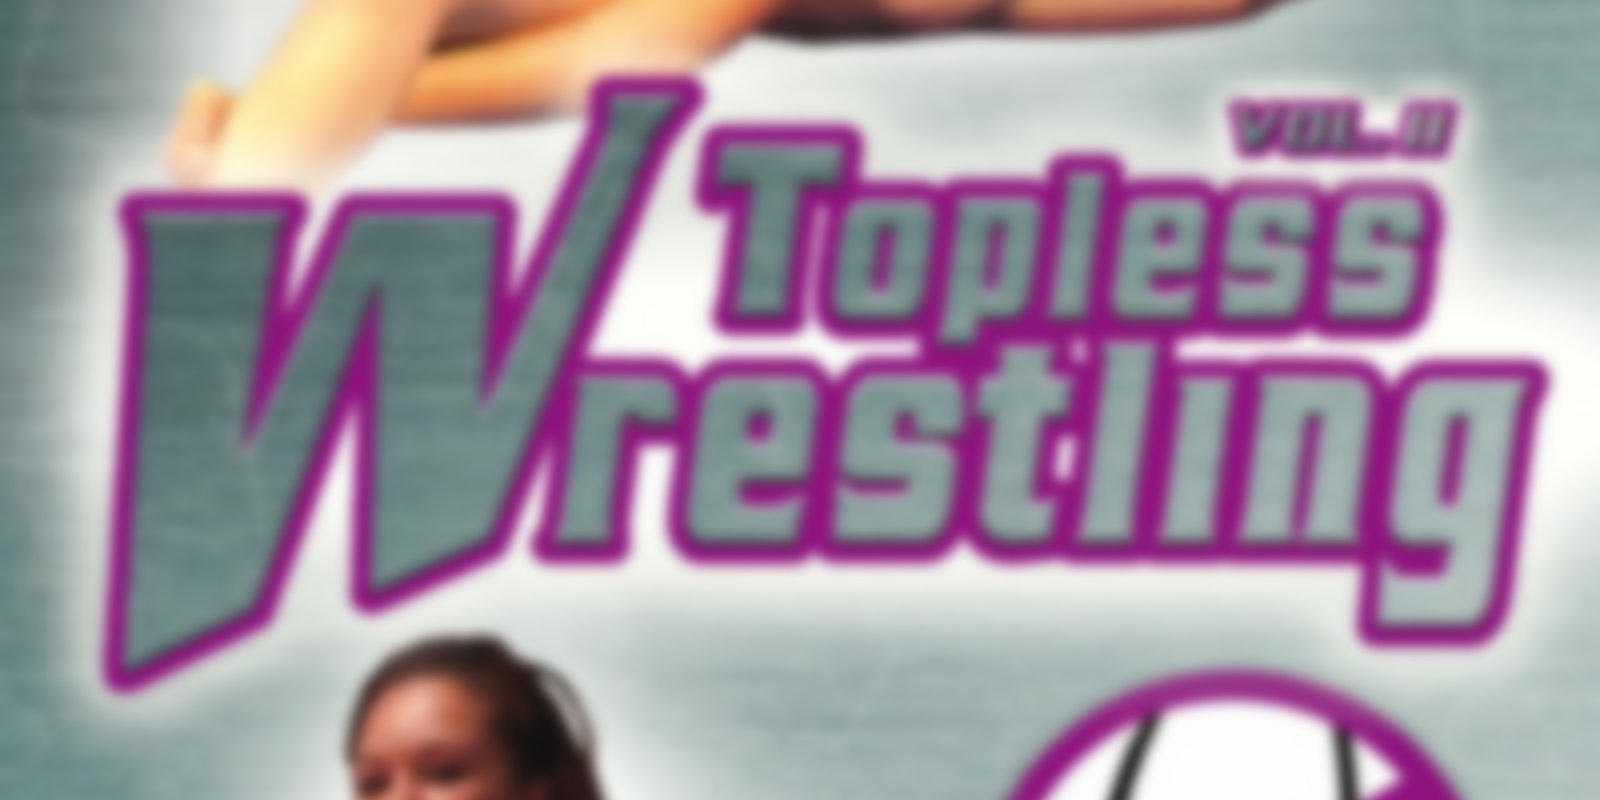 Topless Wrestling - Volume 2